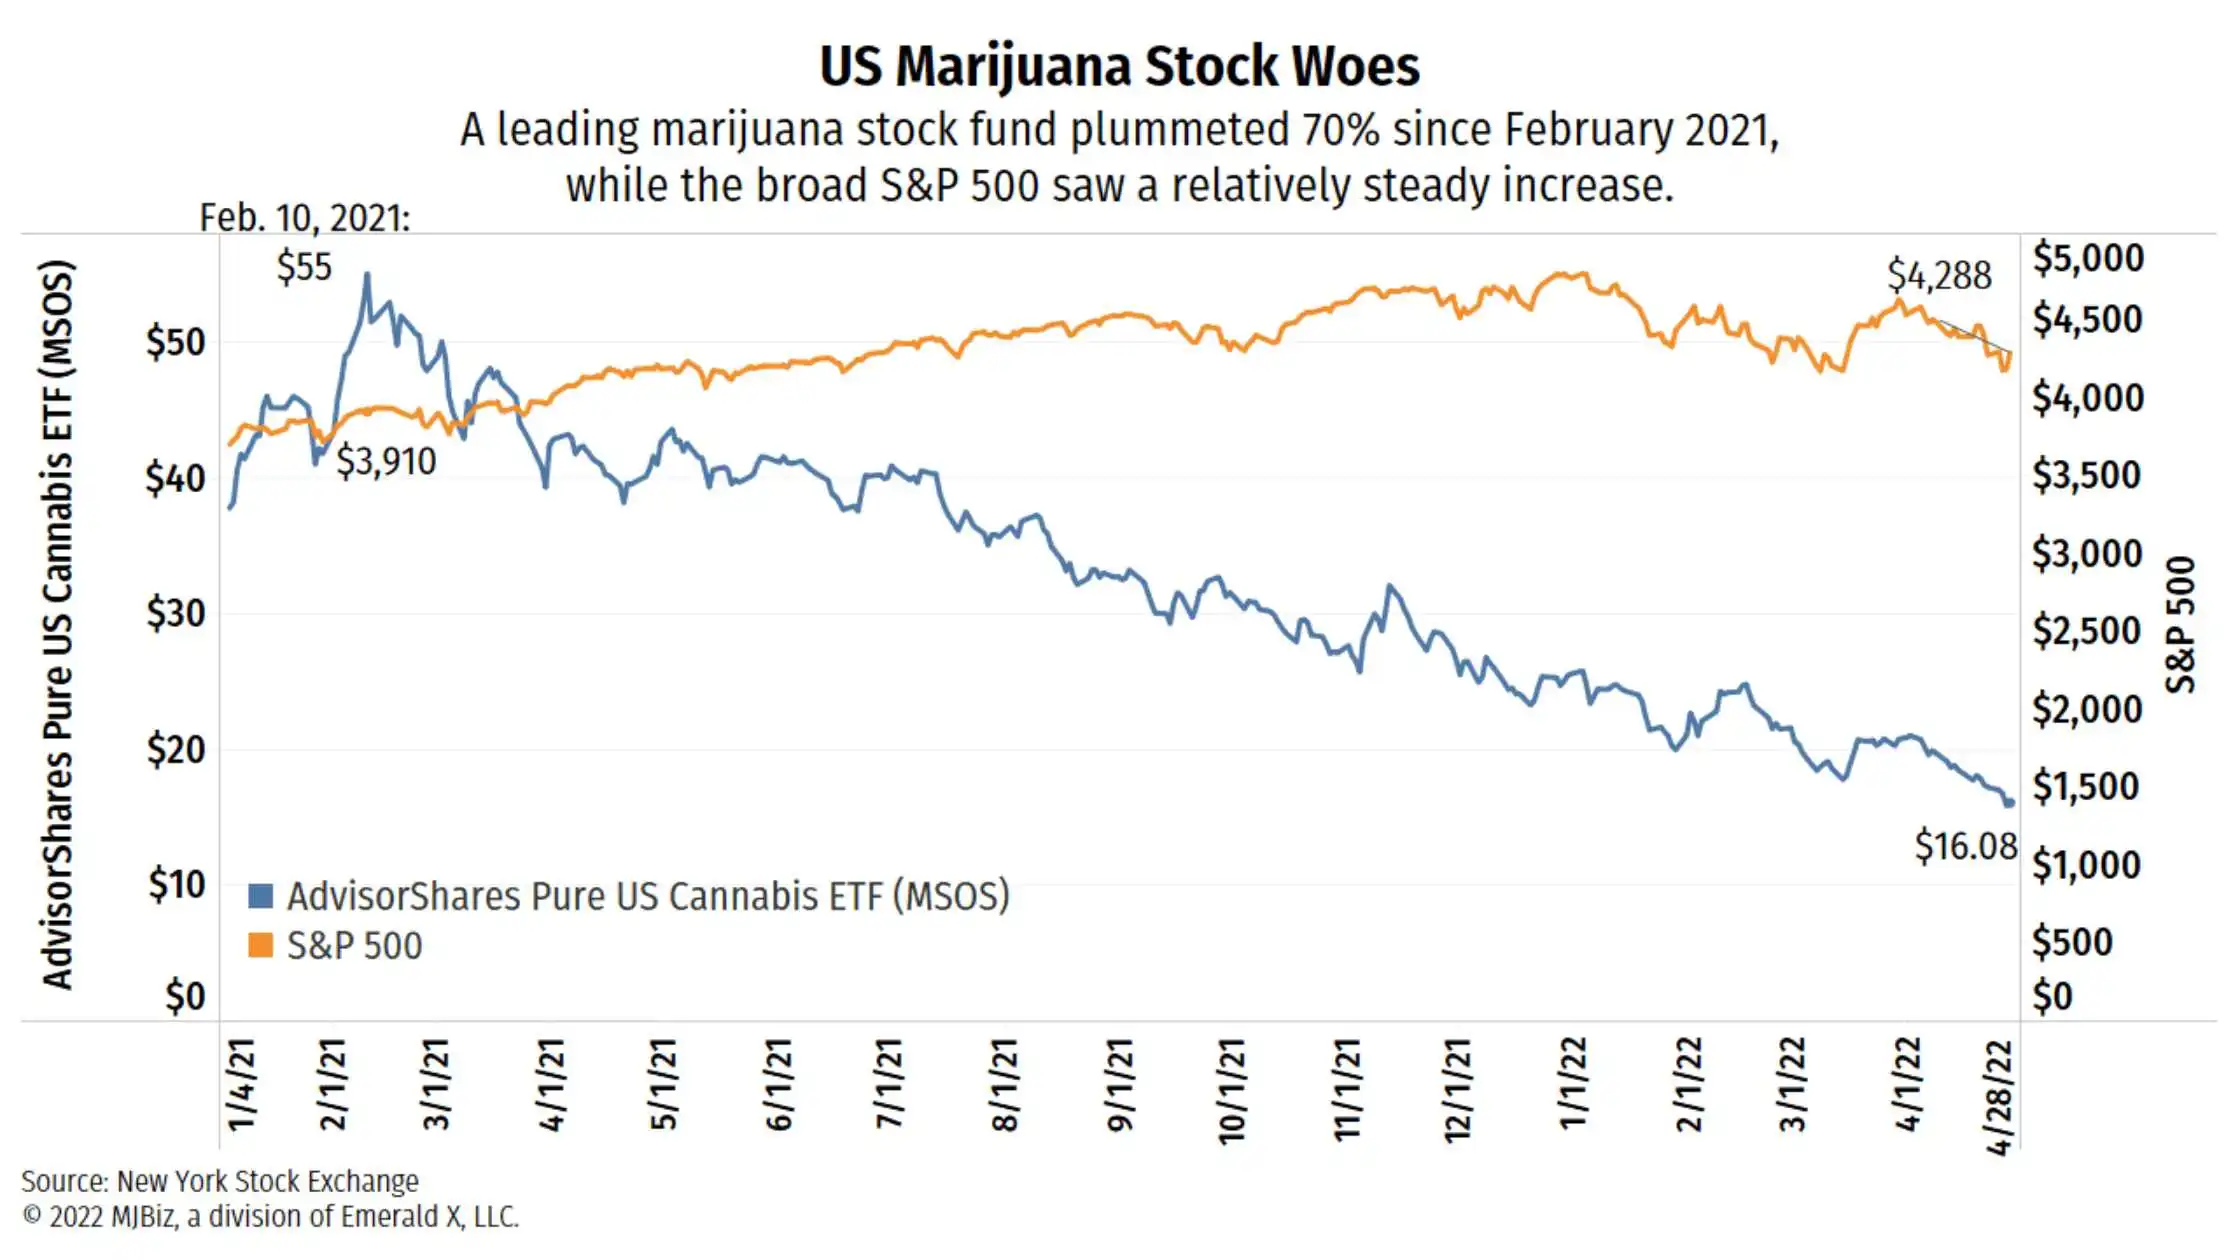 Economic Challenges May Retain Surge in US Marijuana Stock